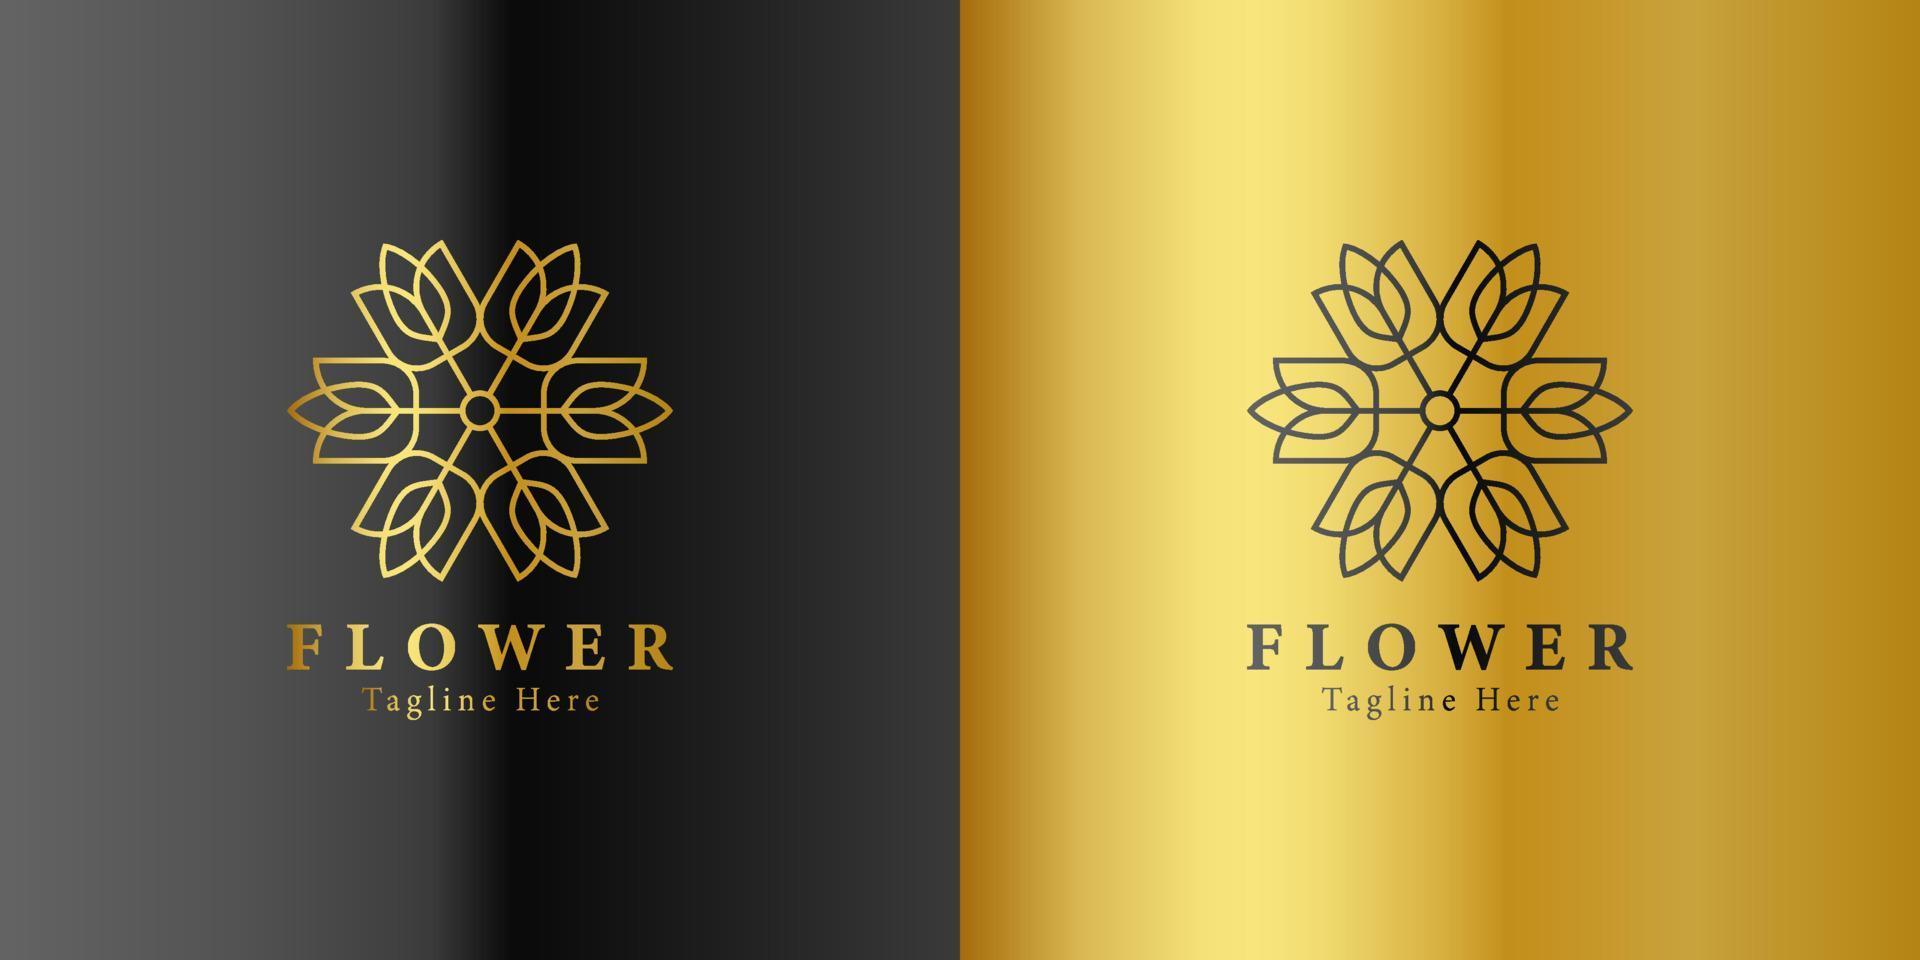 Luxury gold beauty flower spa logo template wellness design for health wellness business vector